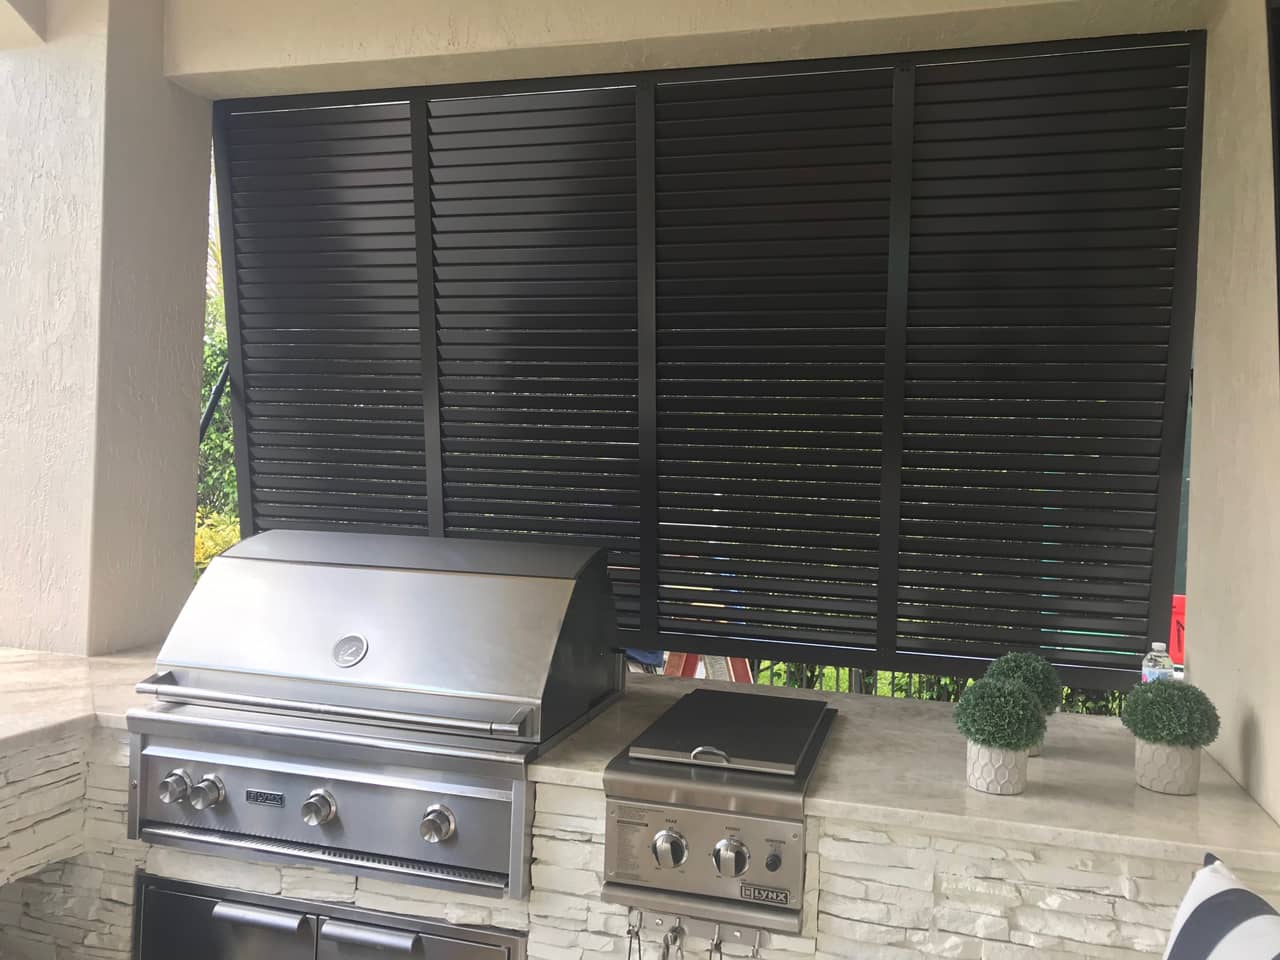 Bahama shutters in outdoor kitchen